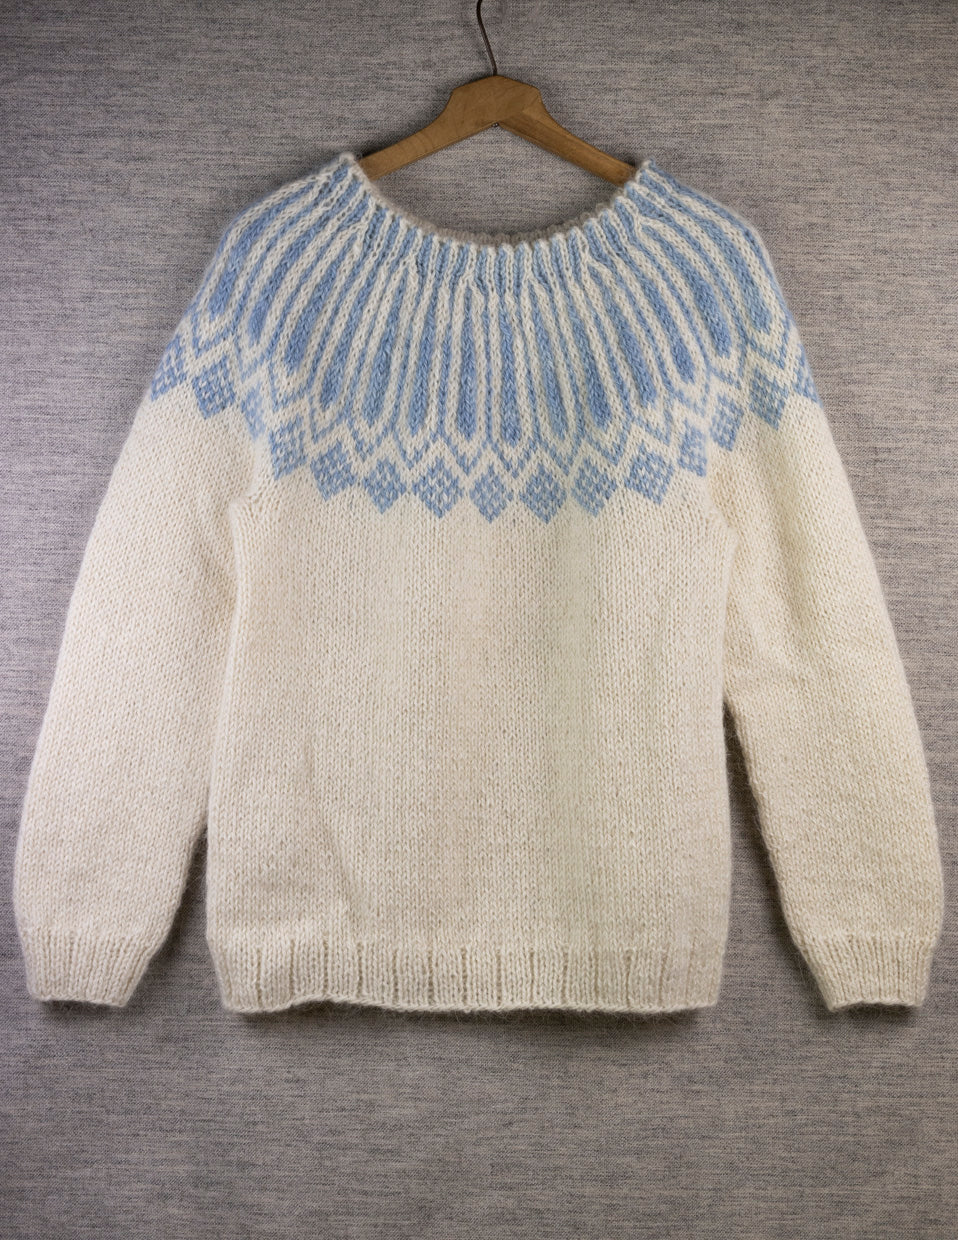 MARKUS, sweater in SAND, knitting kit